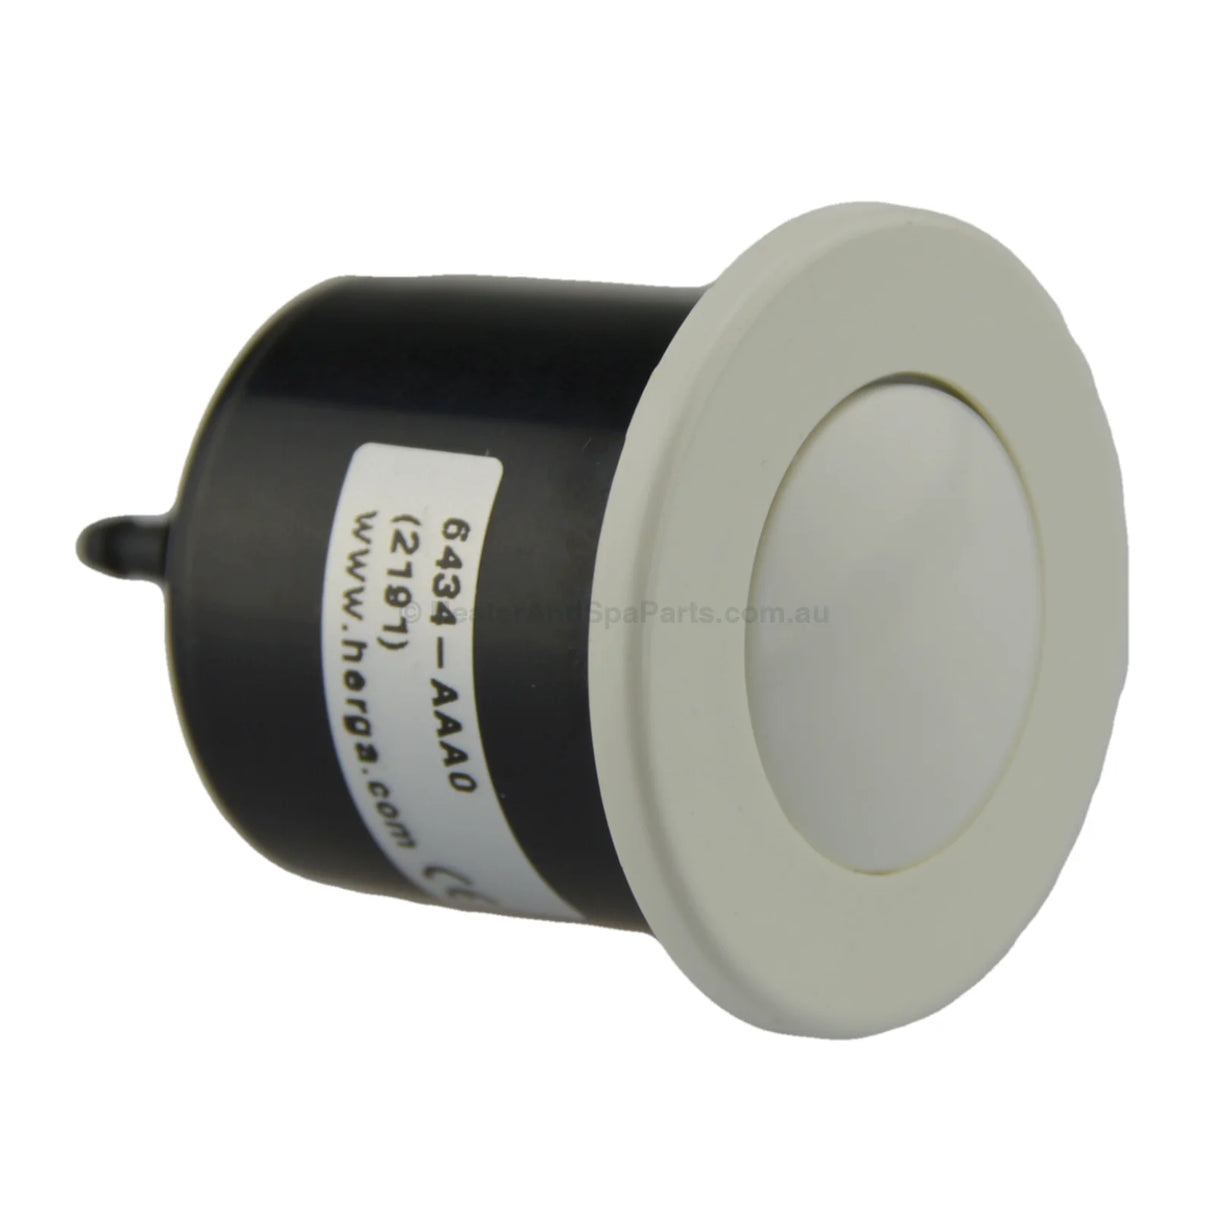 Herga Micro-bore Air Button - White - 27mm - Heater and Spa Parts